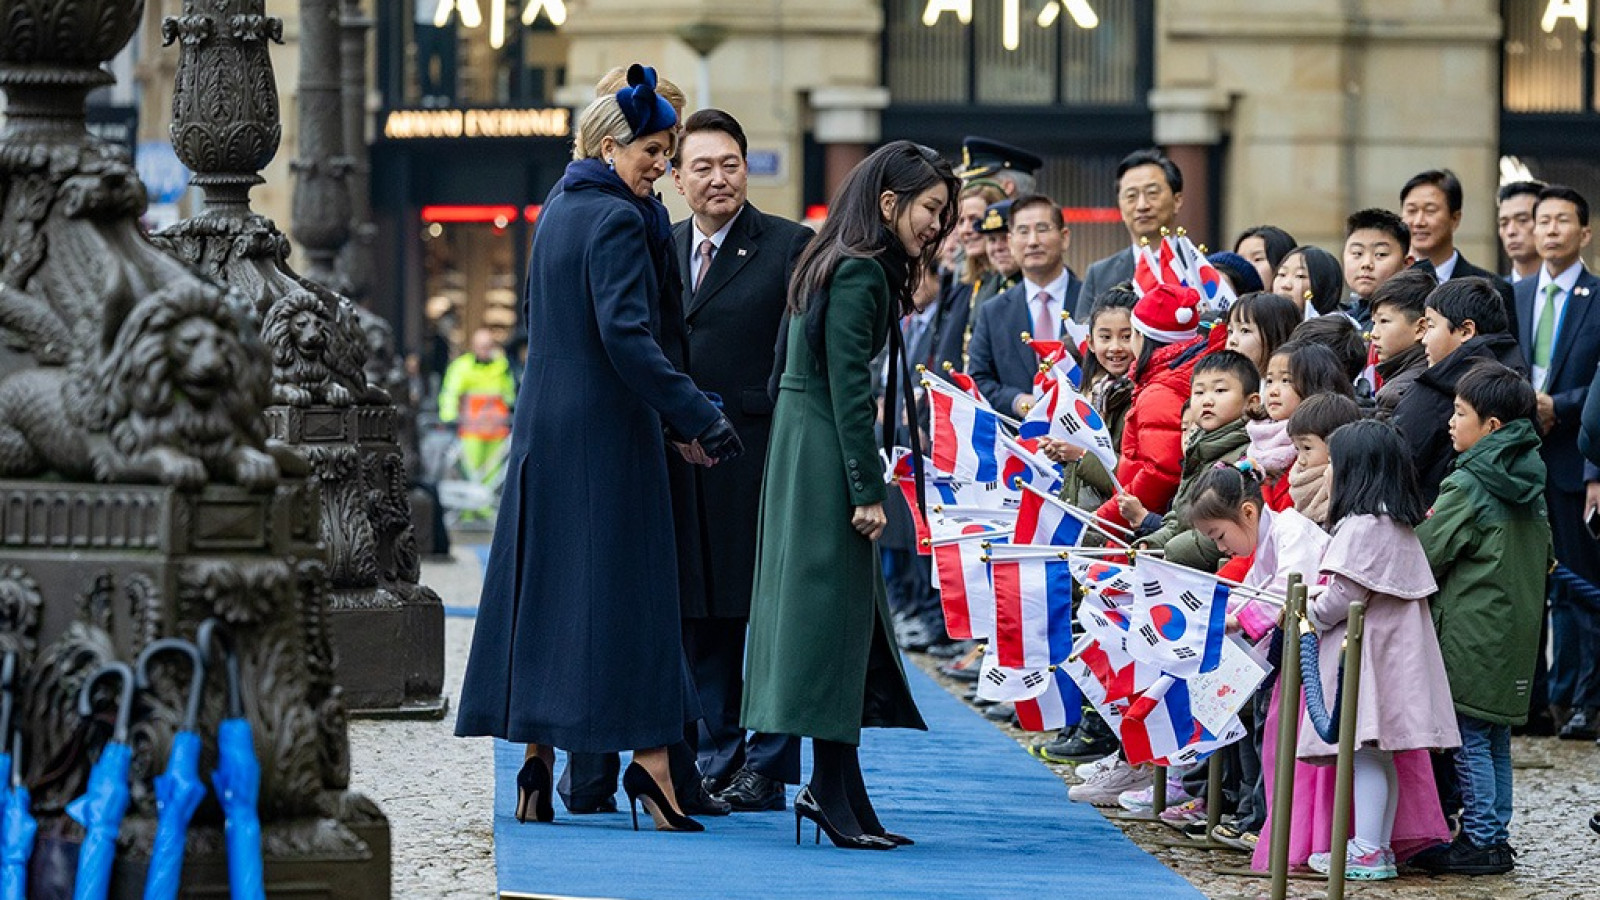 President Yoon Suk Yeol van Zuid-Korea met koning Willem-Alexander